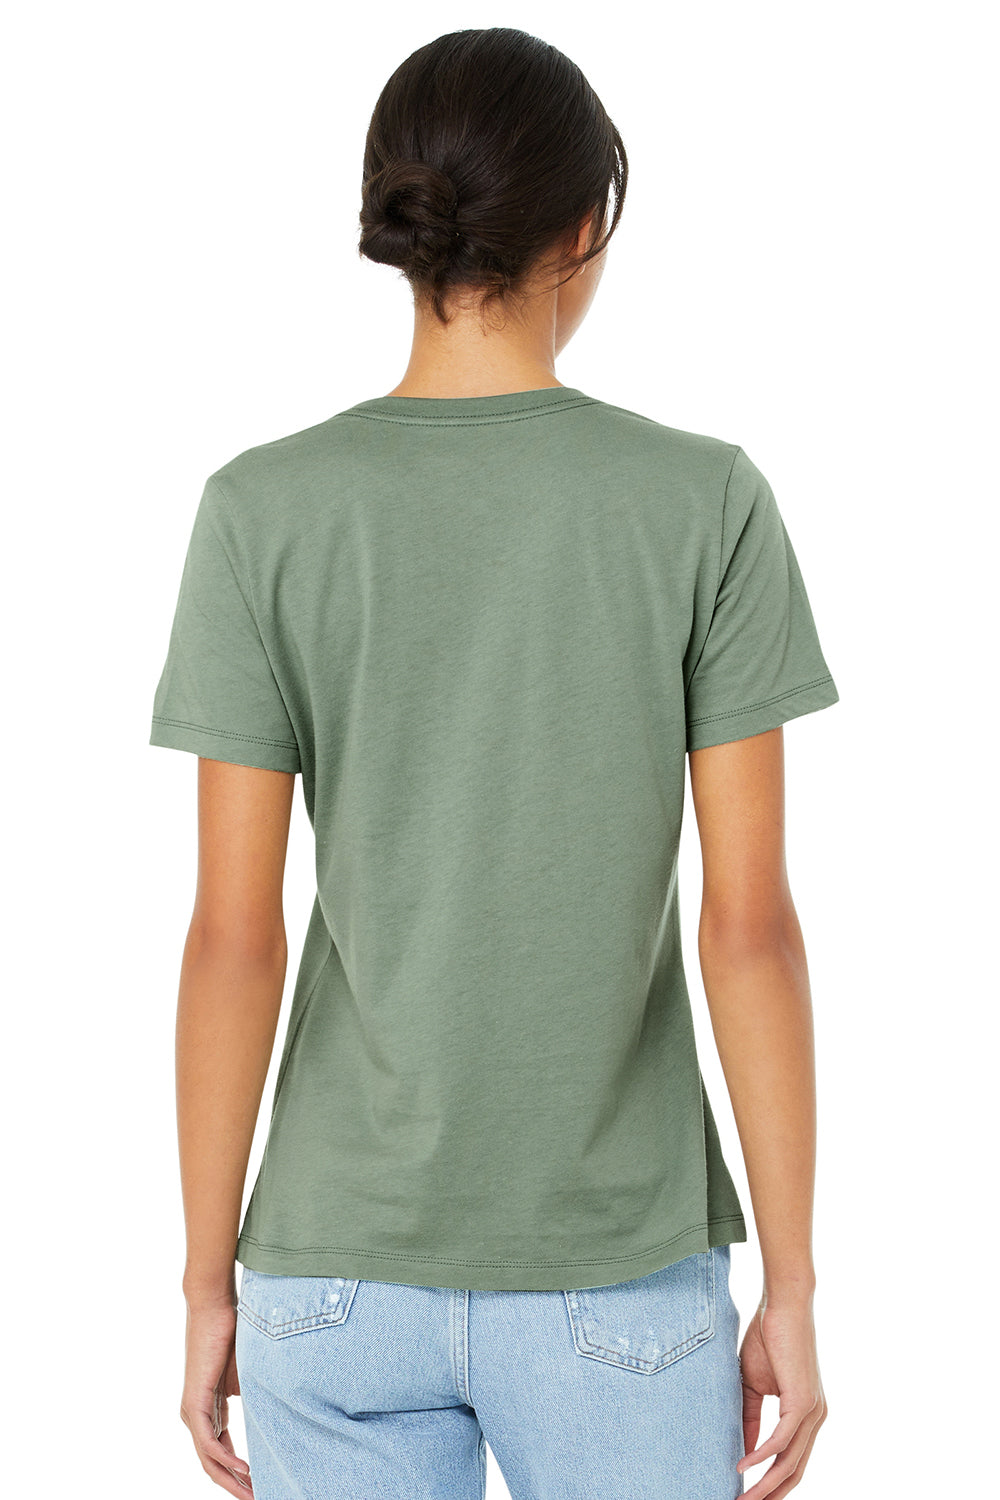 Bella + Canvas BC6400/B6400/6400 Womens Relaxed Jersey Short Sleeve Crewneck T-Shirt Sage Green Model Back